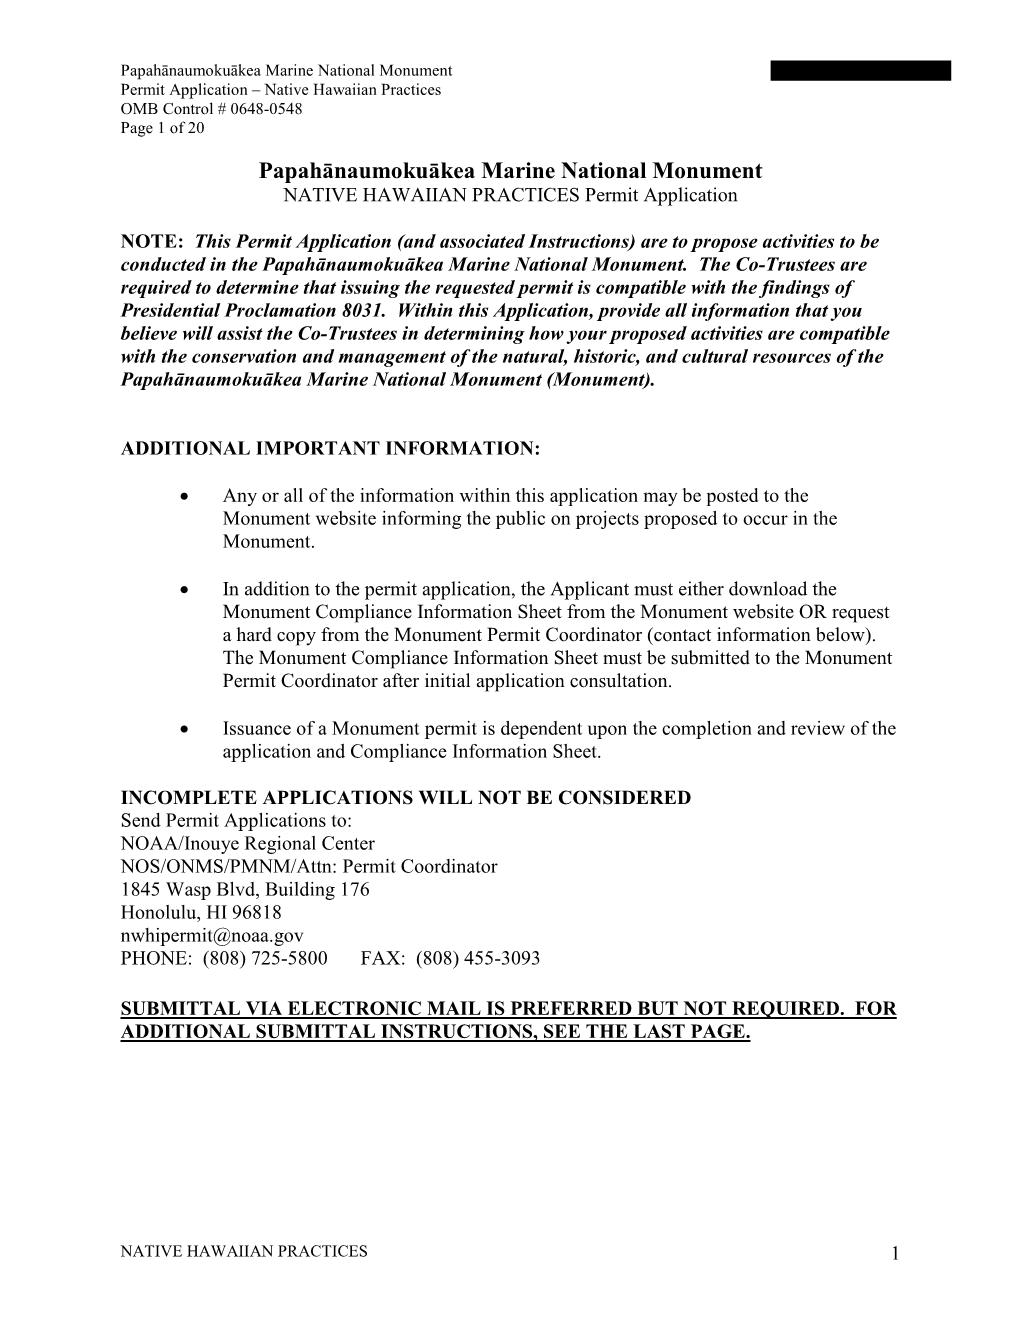 Papahānaumokuākea Marine National Monument Permit Application – Native Hawaiian Practices OMB Control # 0648-0548 Page 1 of 20